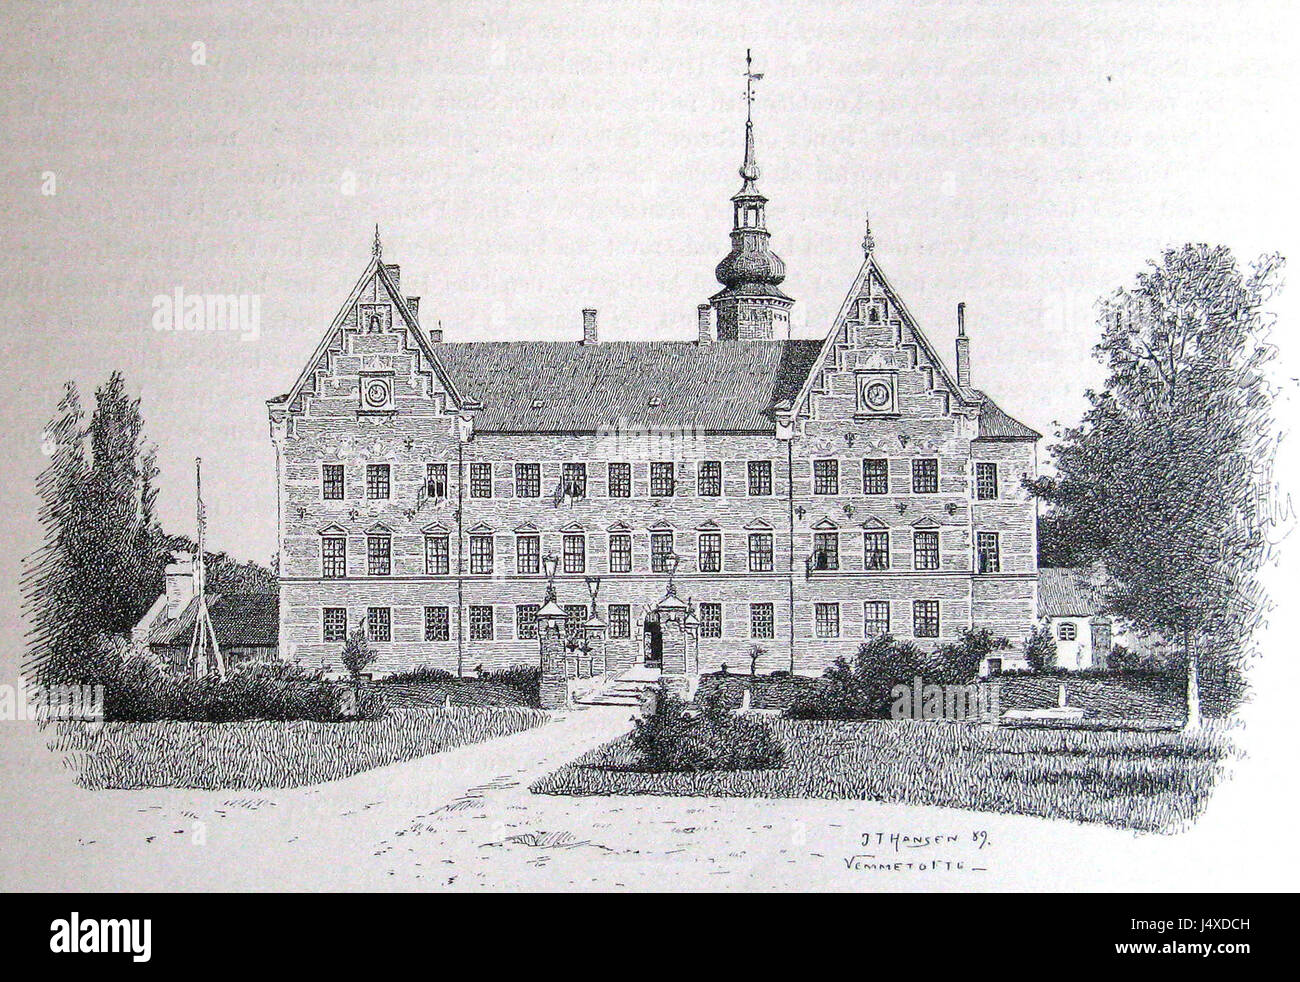 Vemmetofte JT Hansen 1889 Stockfoto